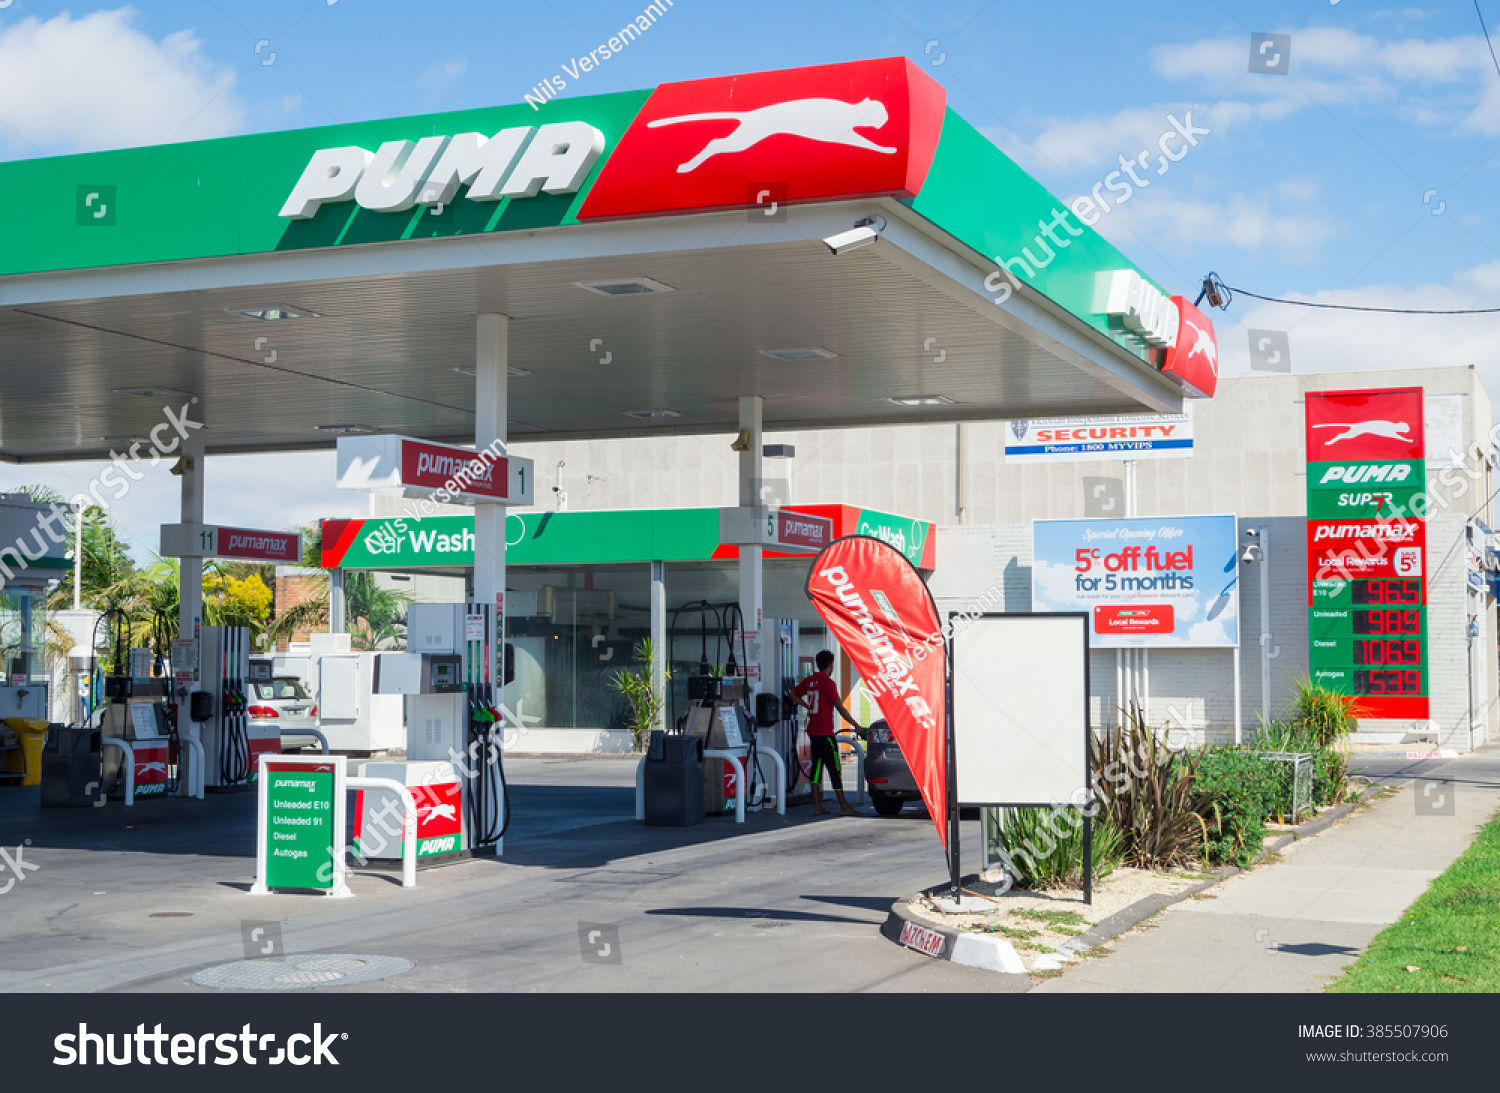 puma fuels australia